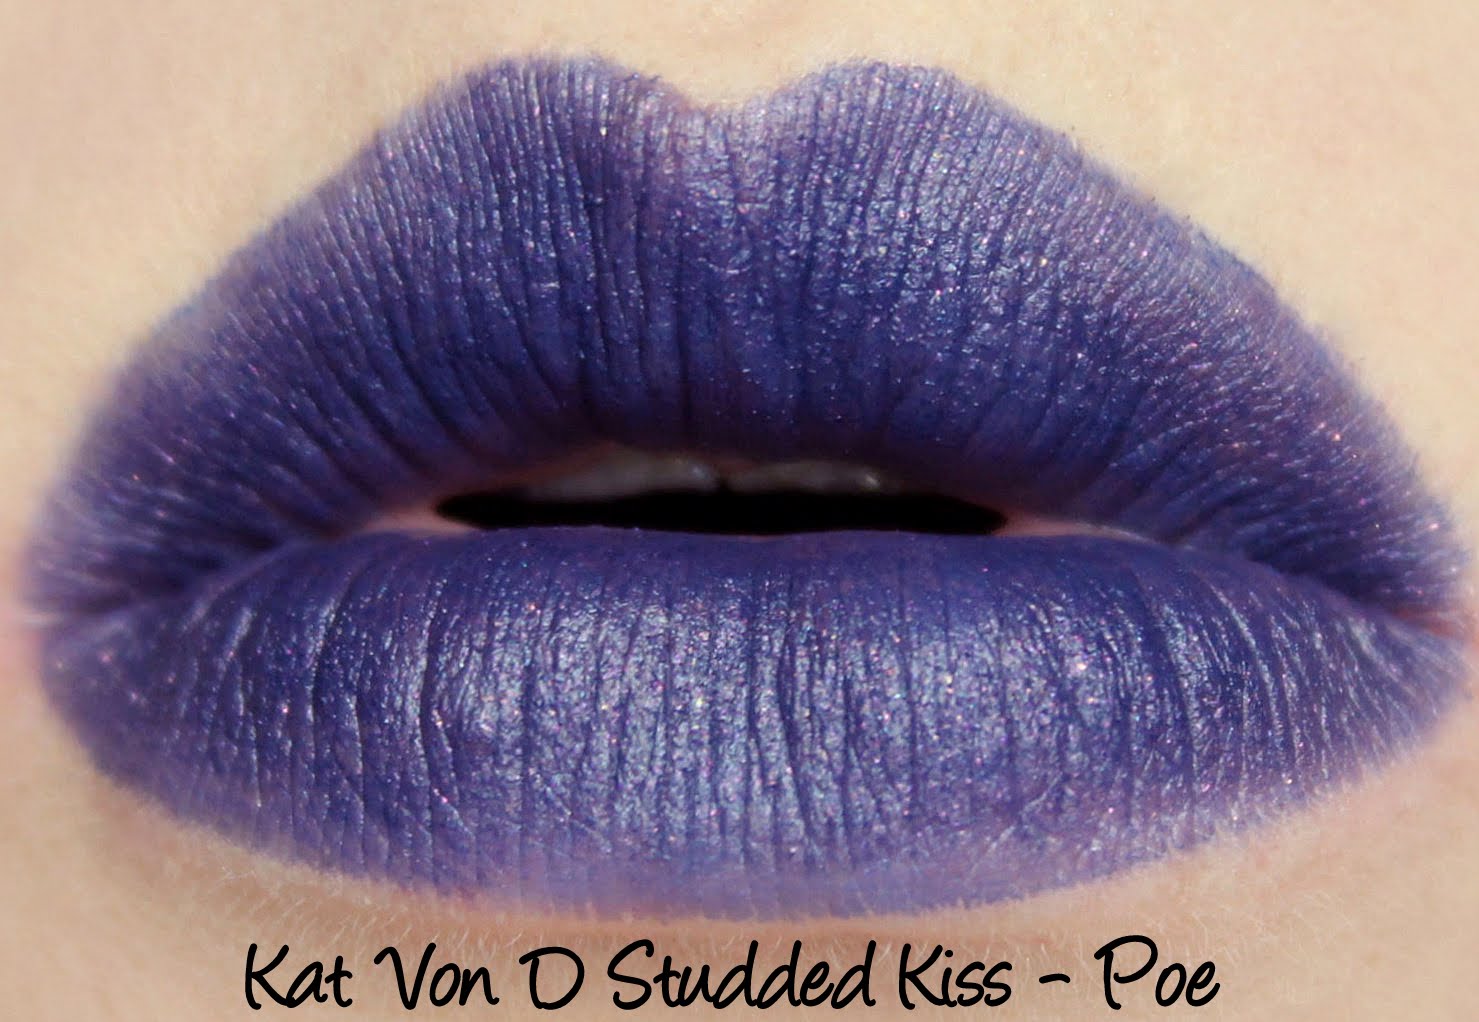 Kat Von D Studded Kiss Lipstick - Poe Swatches & Review